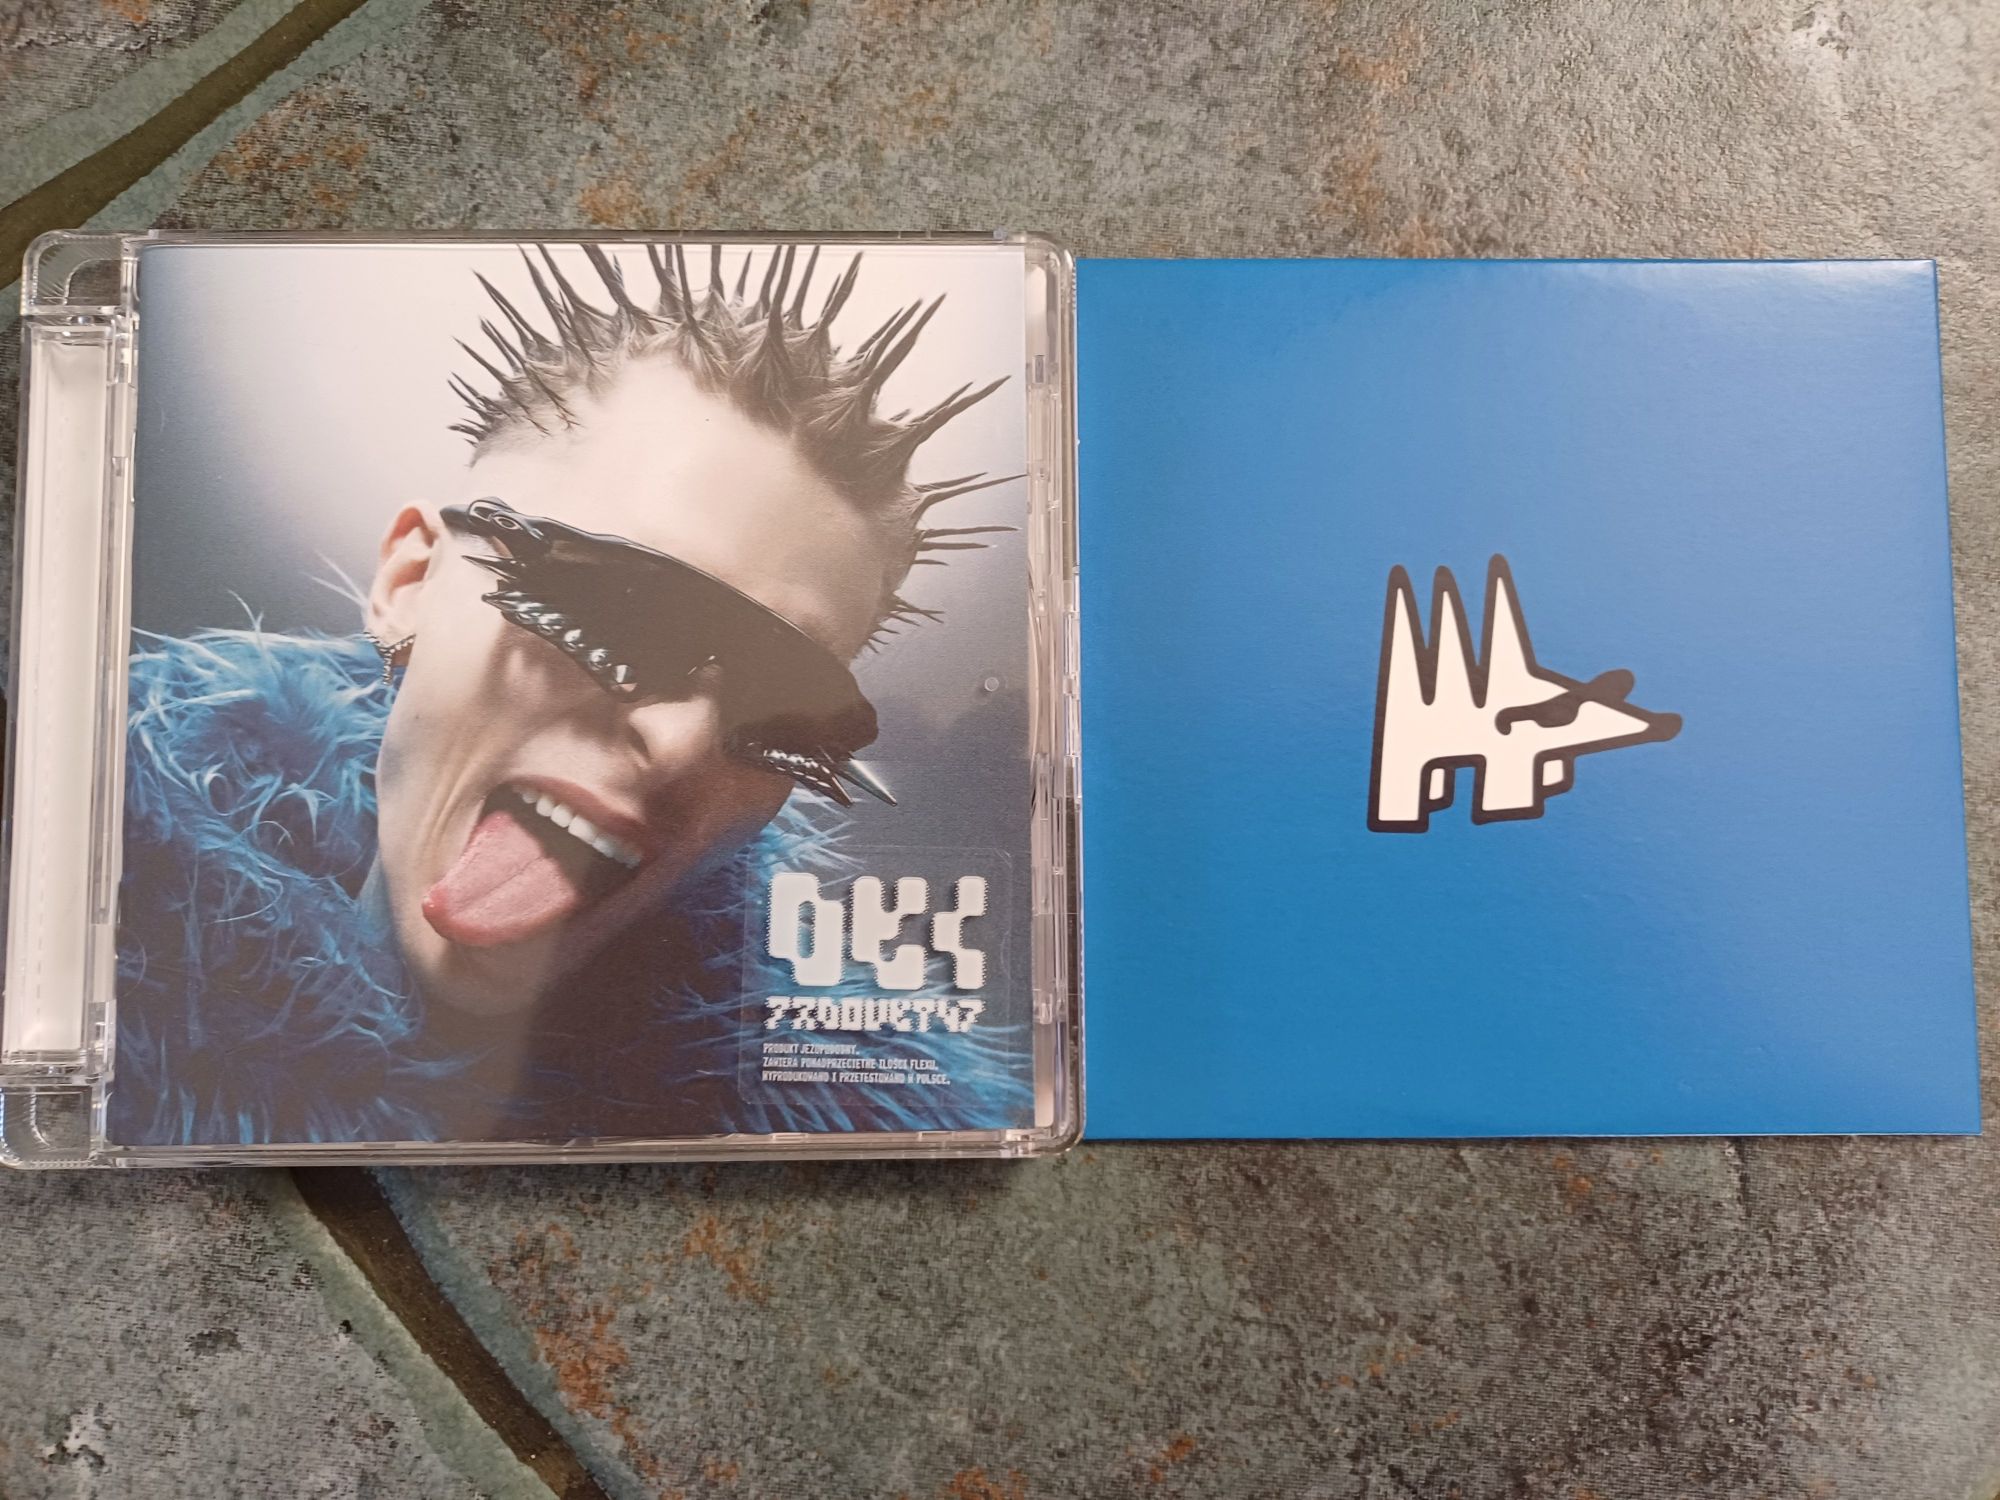 Oki - Produkt47 + bonus EP / preorder LTD